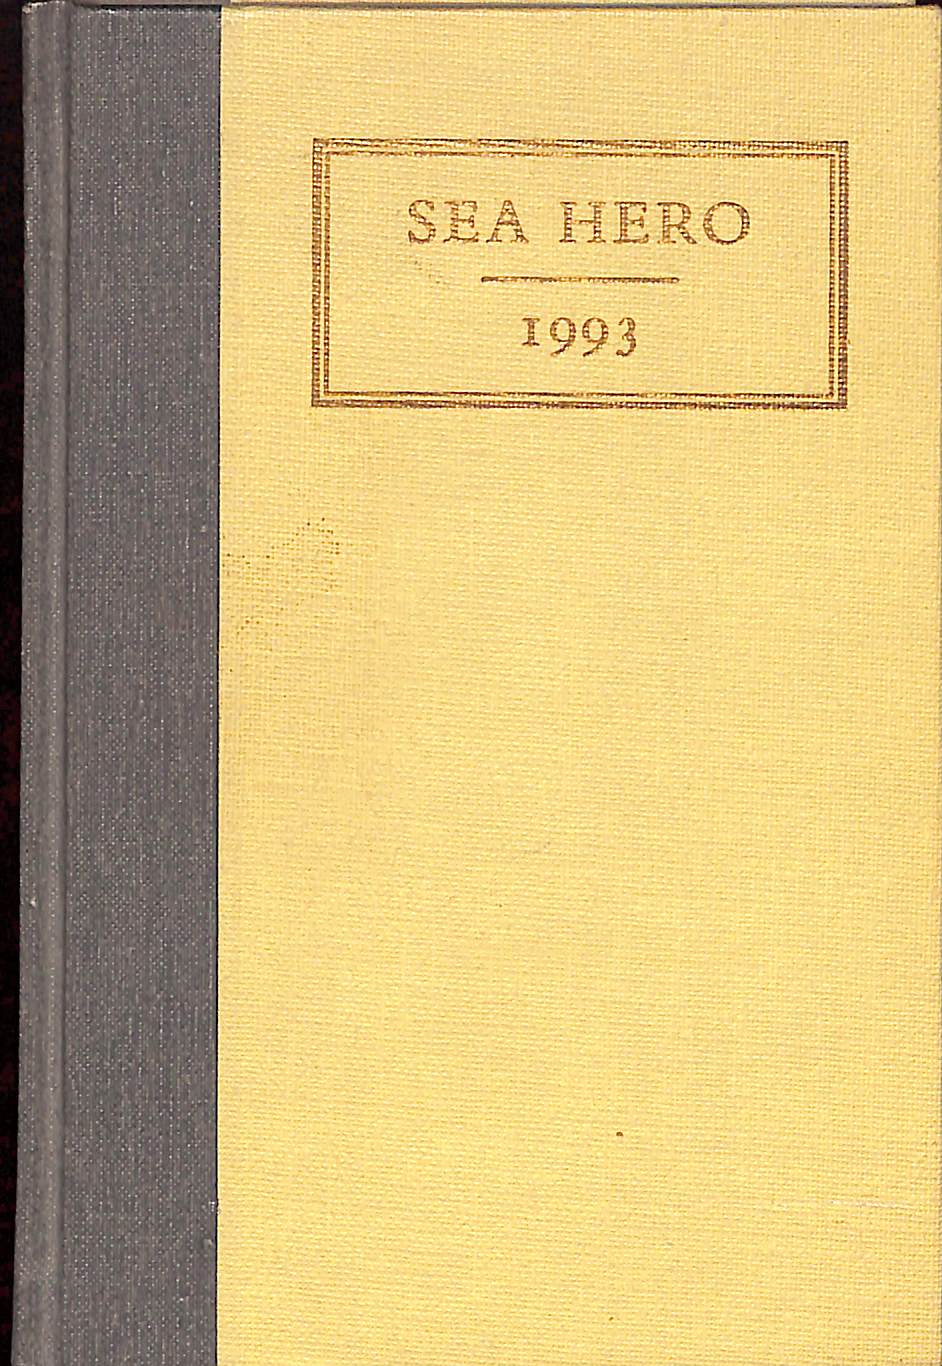 "Sea Hero" 1993 KELLY, Lloyd